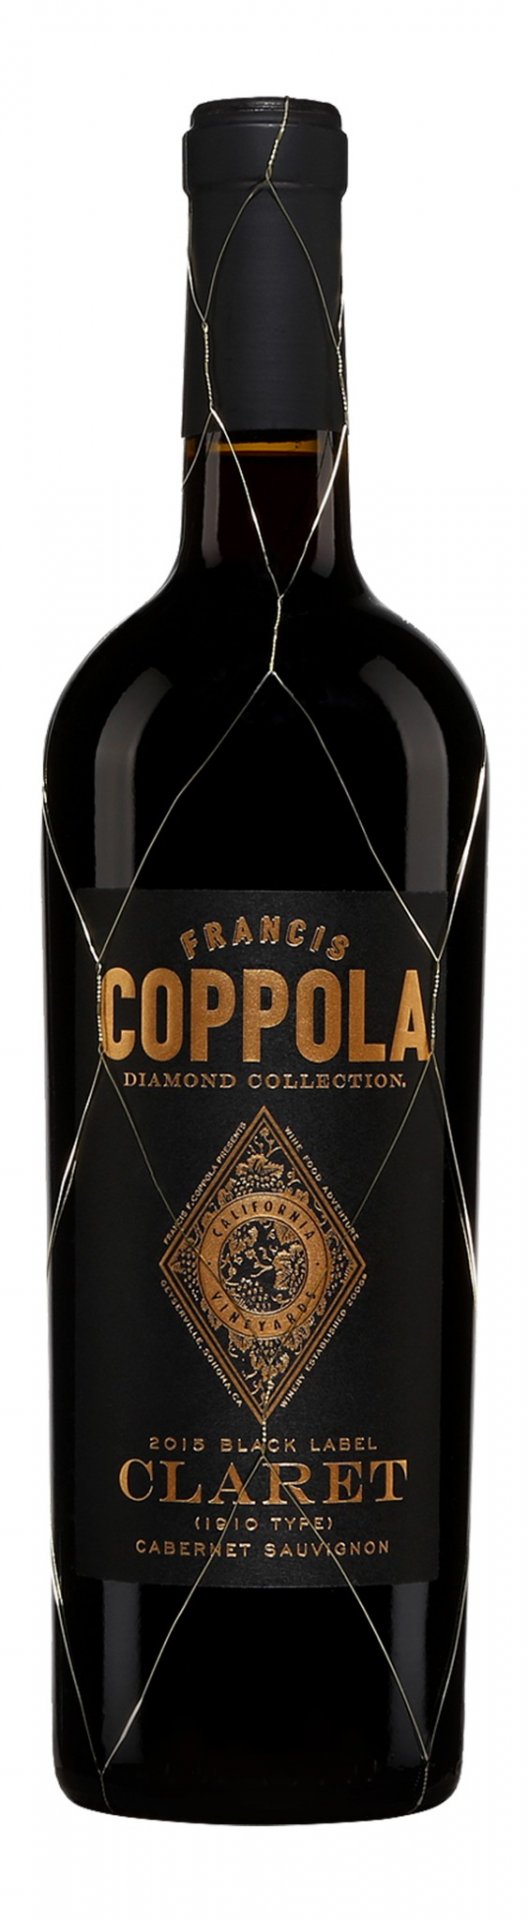 Francis Coppola Diamond Collection Black Label Claret Cabernet Sauvignon